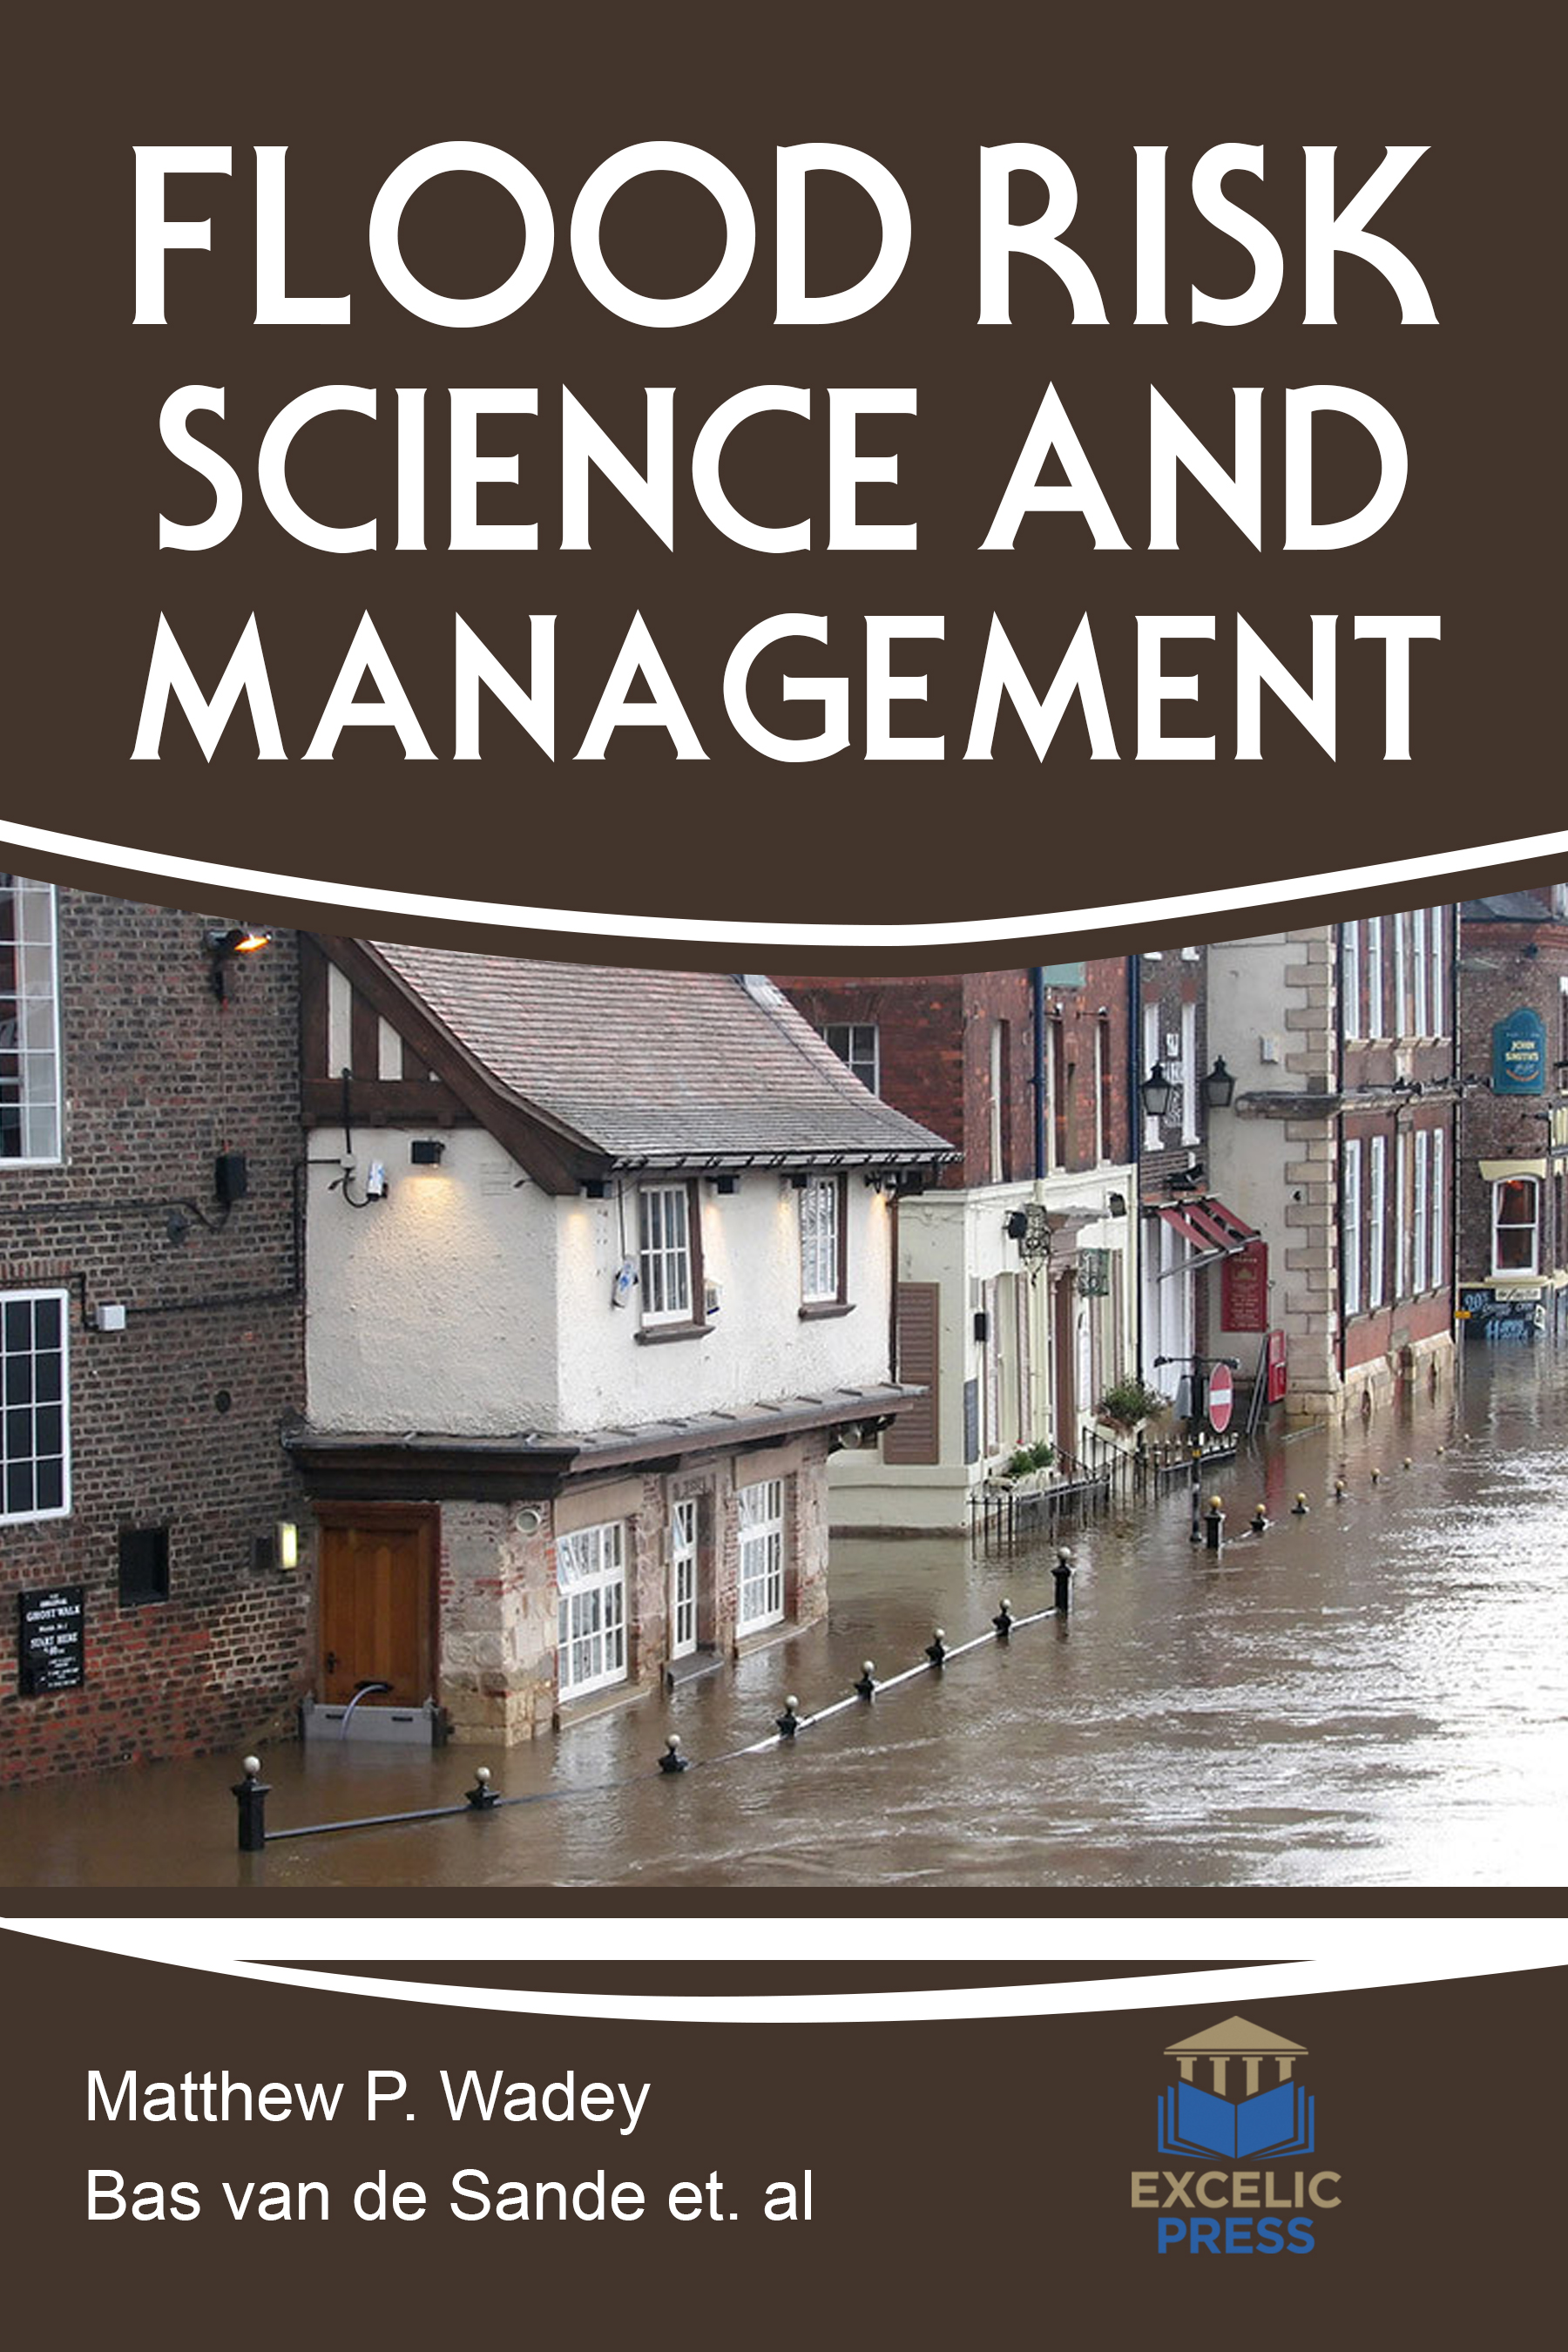 thesis flood risk management